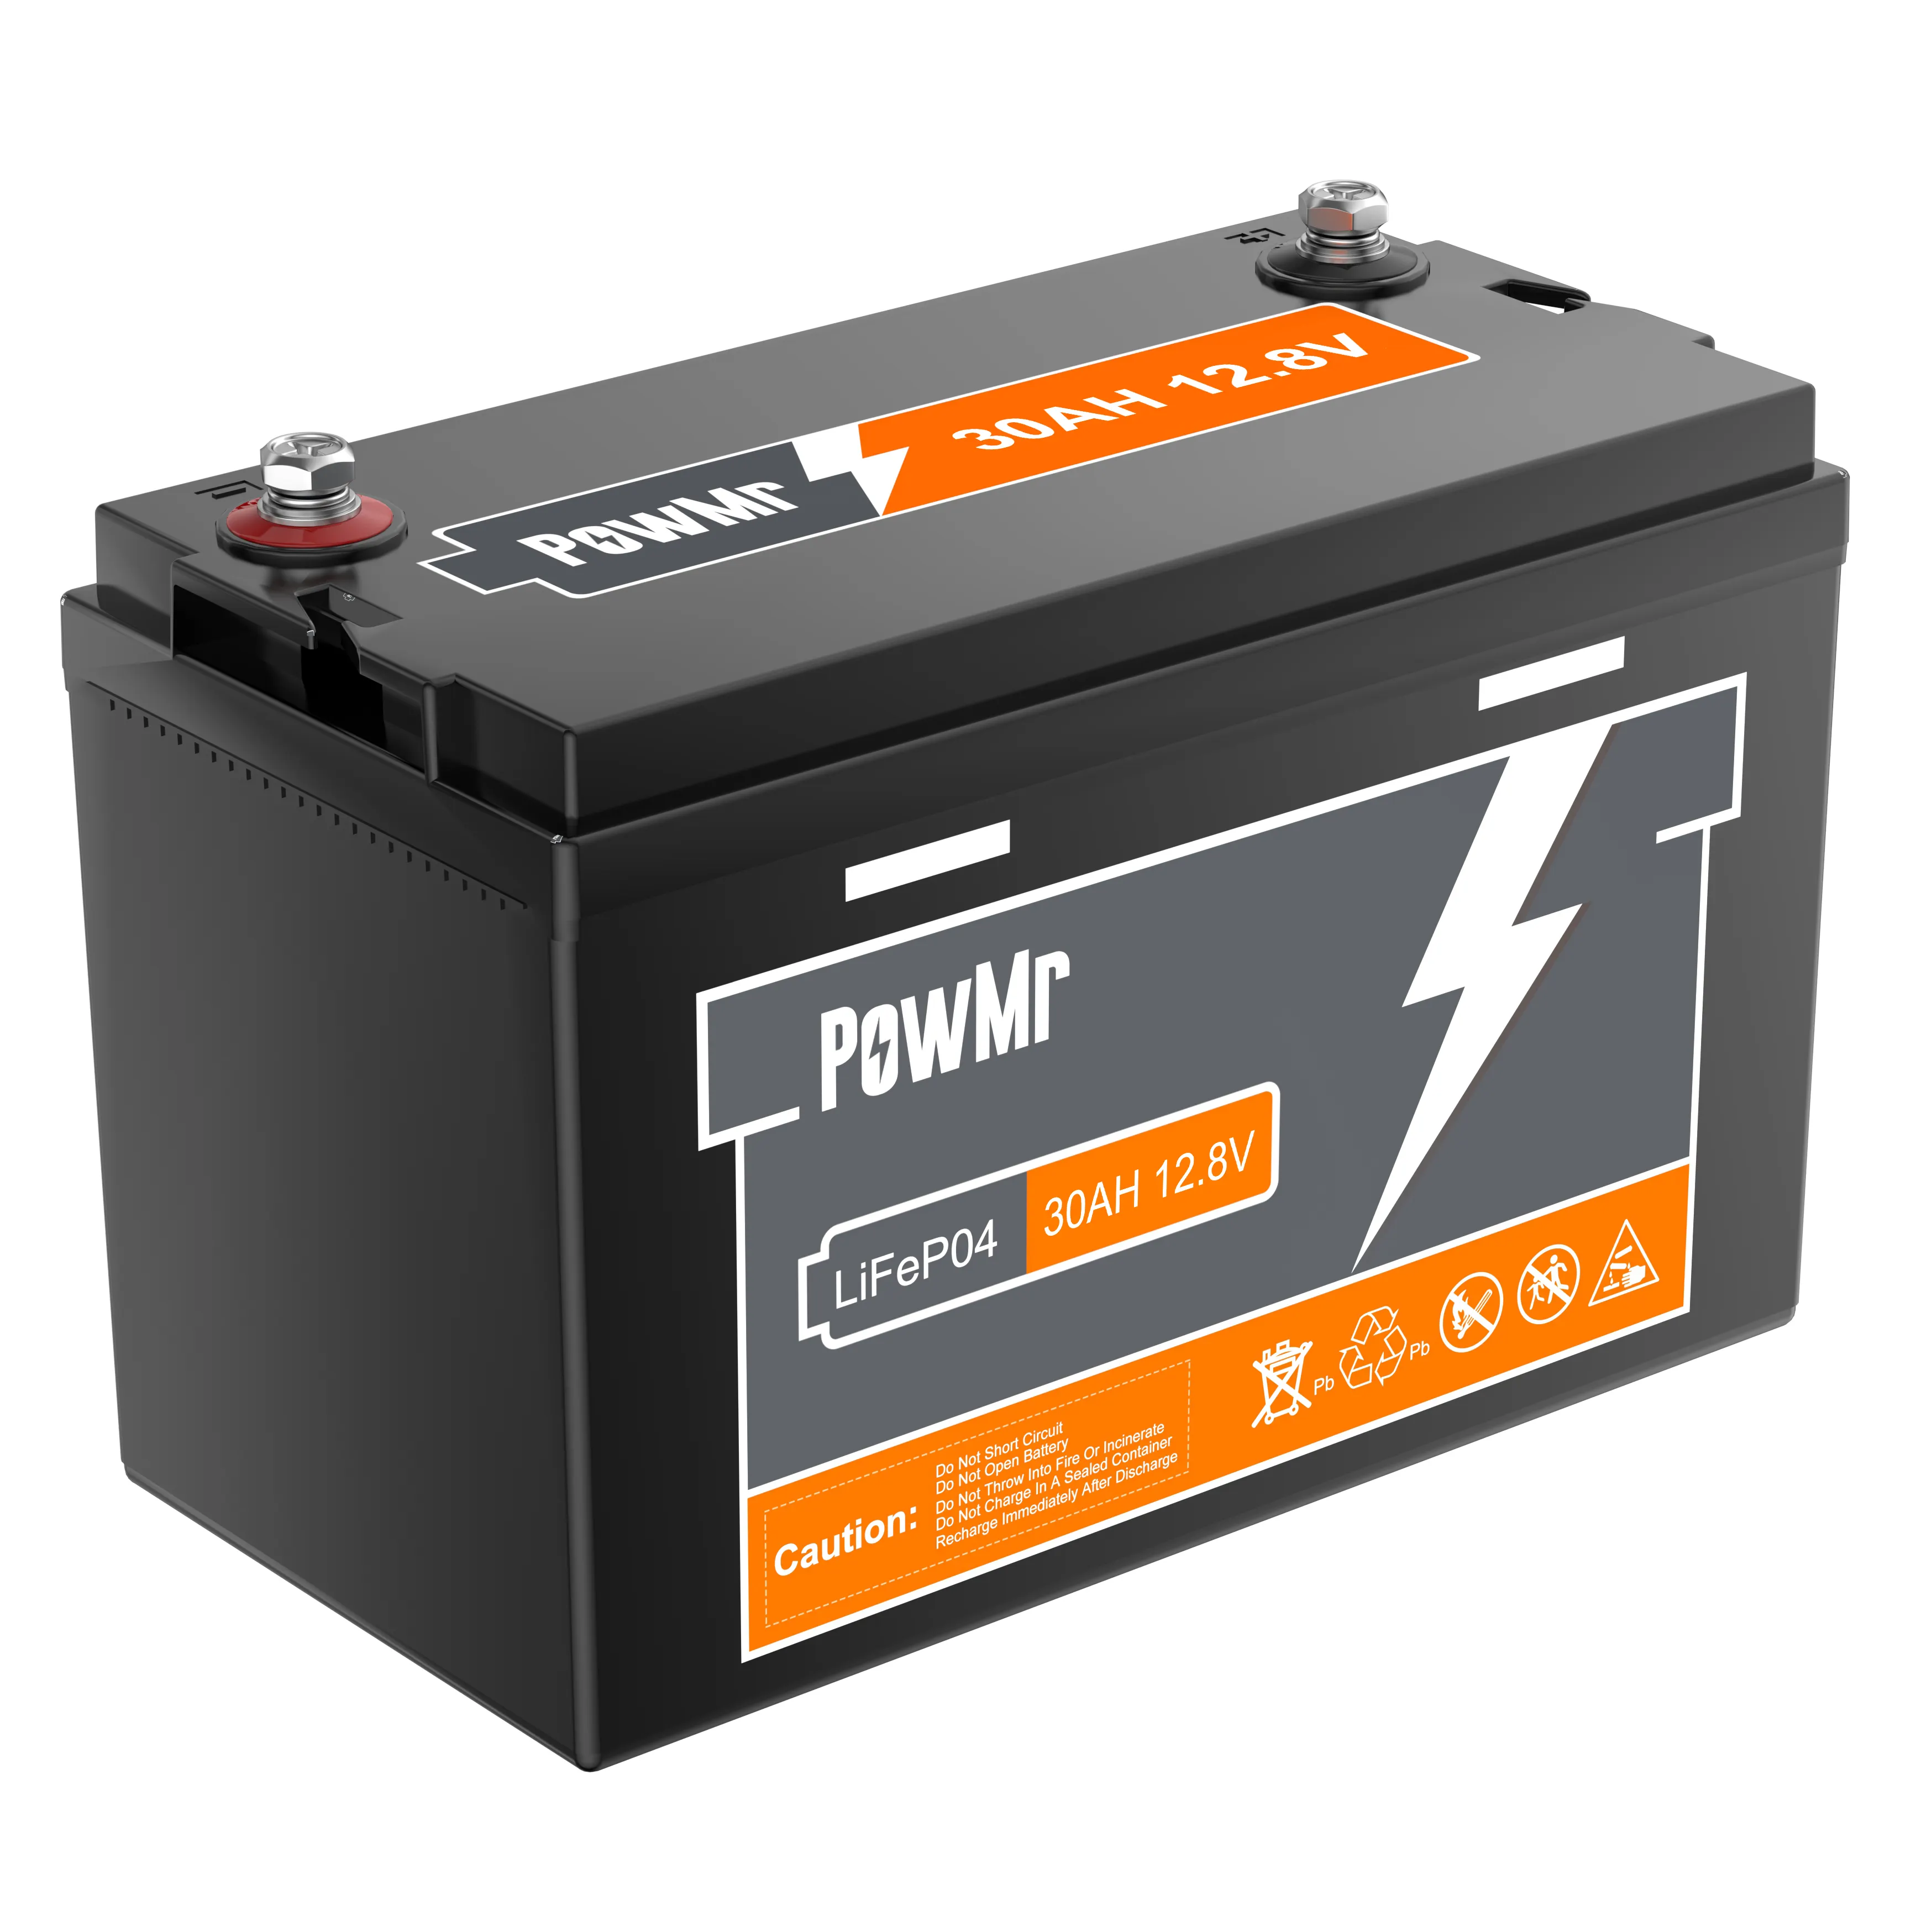 PowMr Latest For Solar Gel Battery Professional Lithium Lead-acid Battery 12.8V 30AH LiFePO4 Battery For Energy Storage